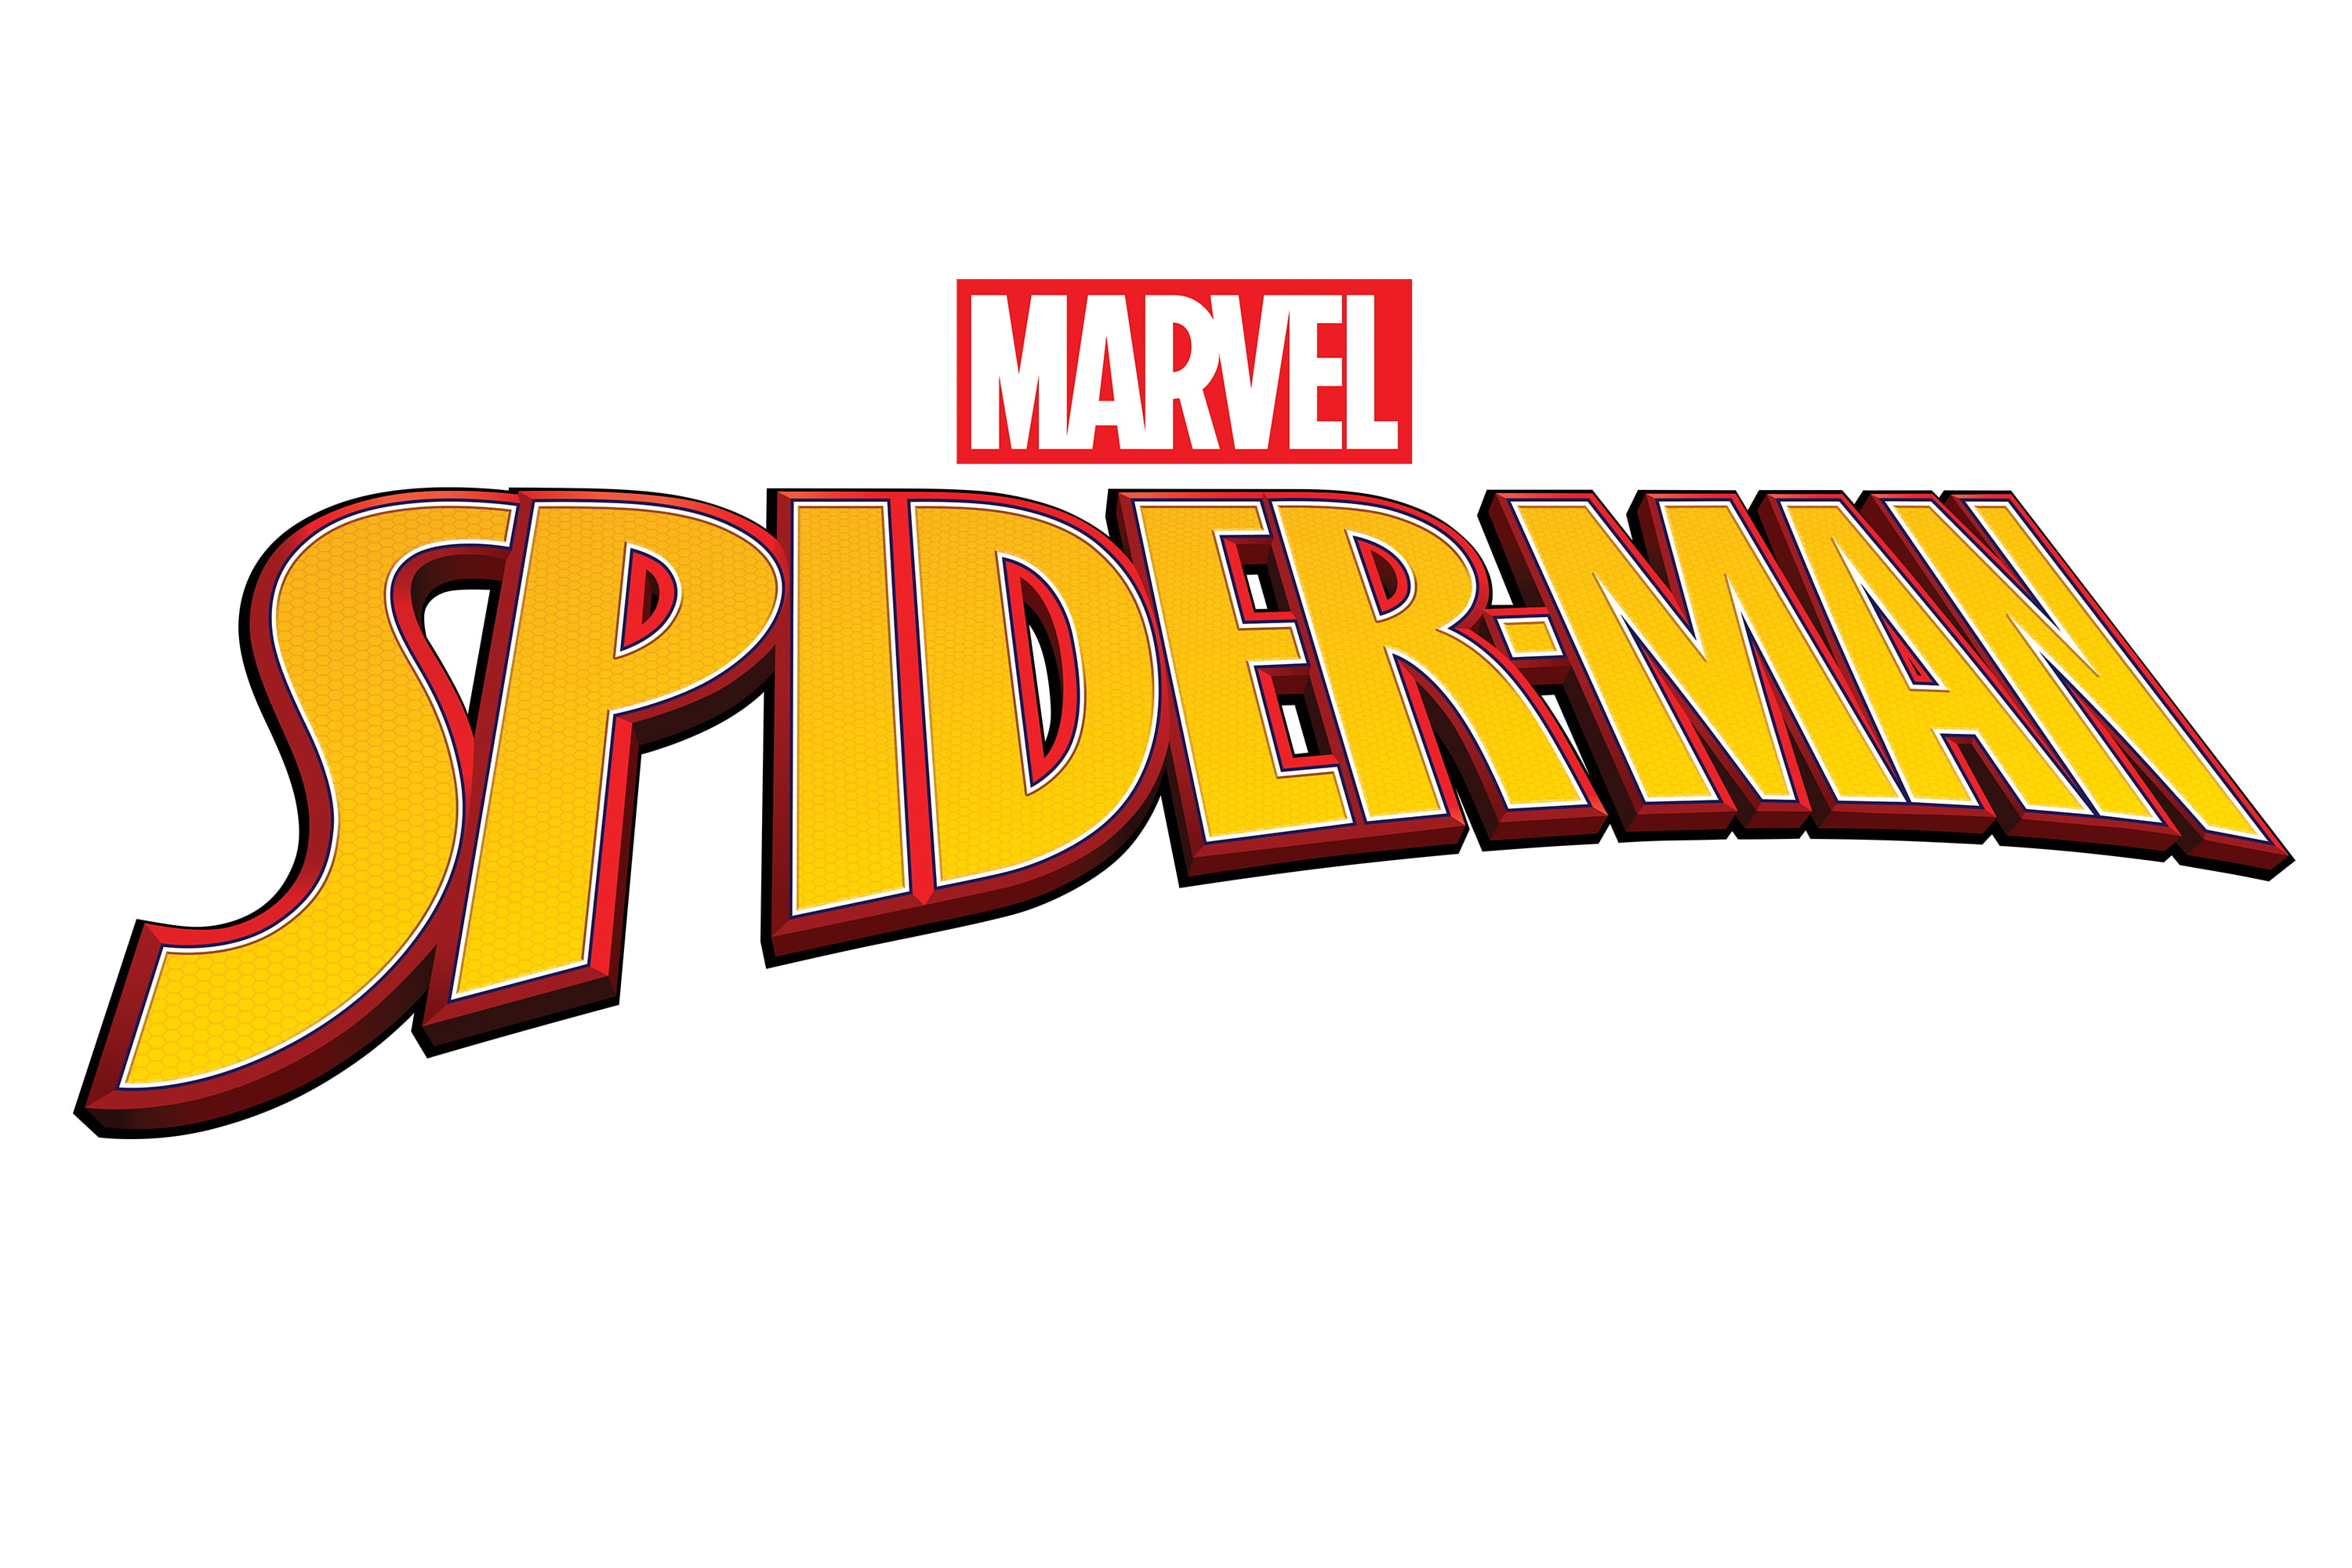 Set Spiderman Marvel avec Journal Intime & Stylo Assorti sur Rapid